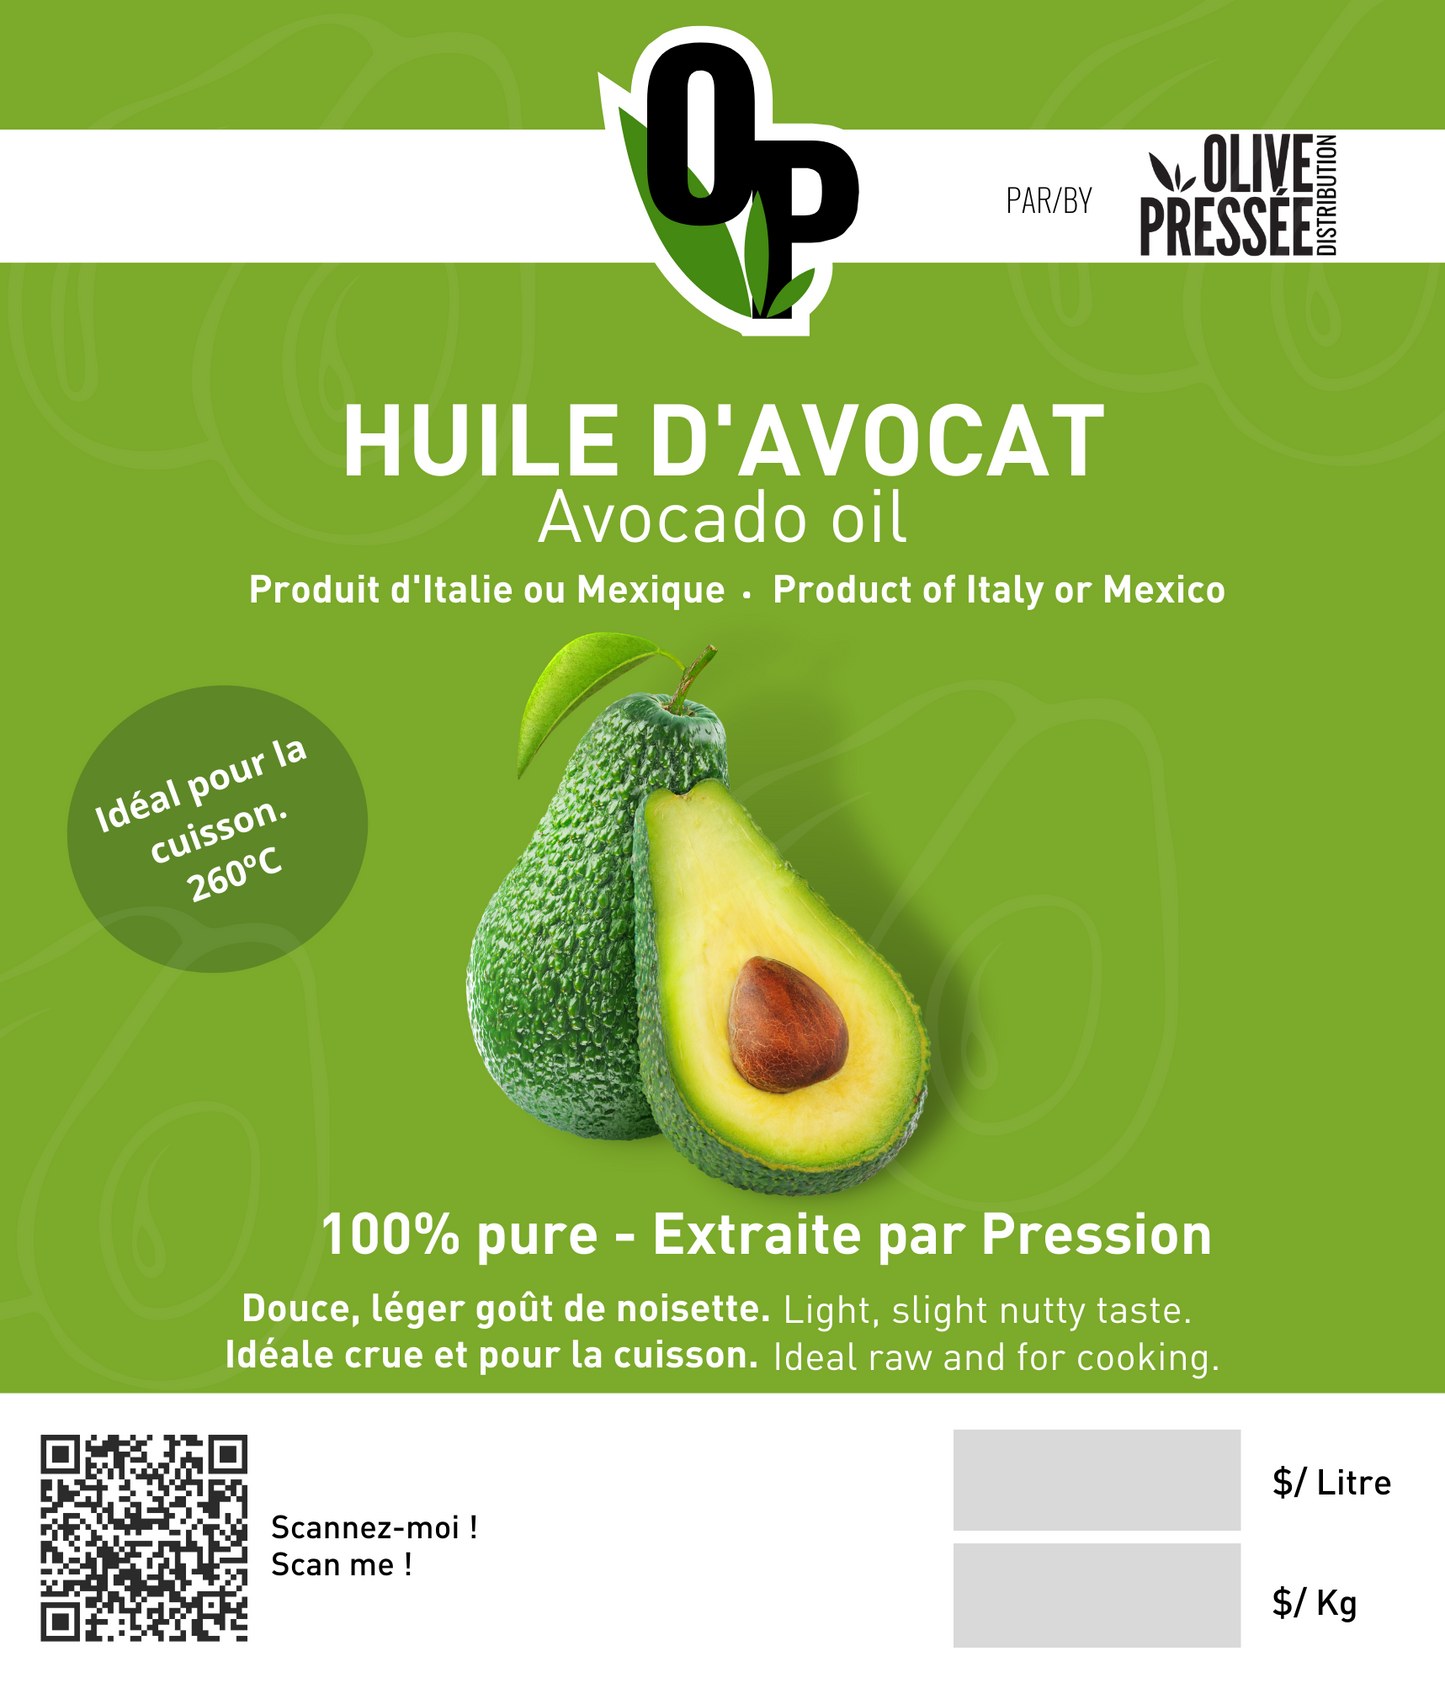 HUILE D'AVOCAT OLIVE PRESSÉE / OLIVE PRESSÉE AVOCADO OIL